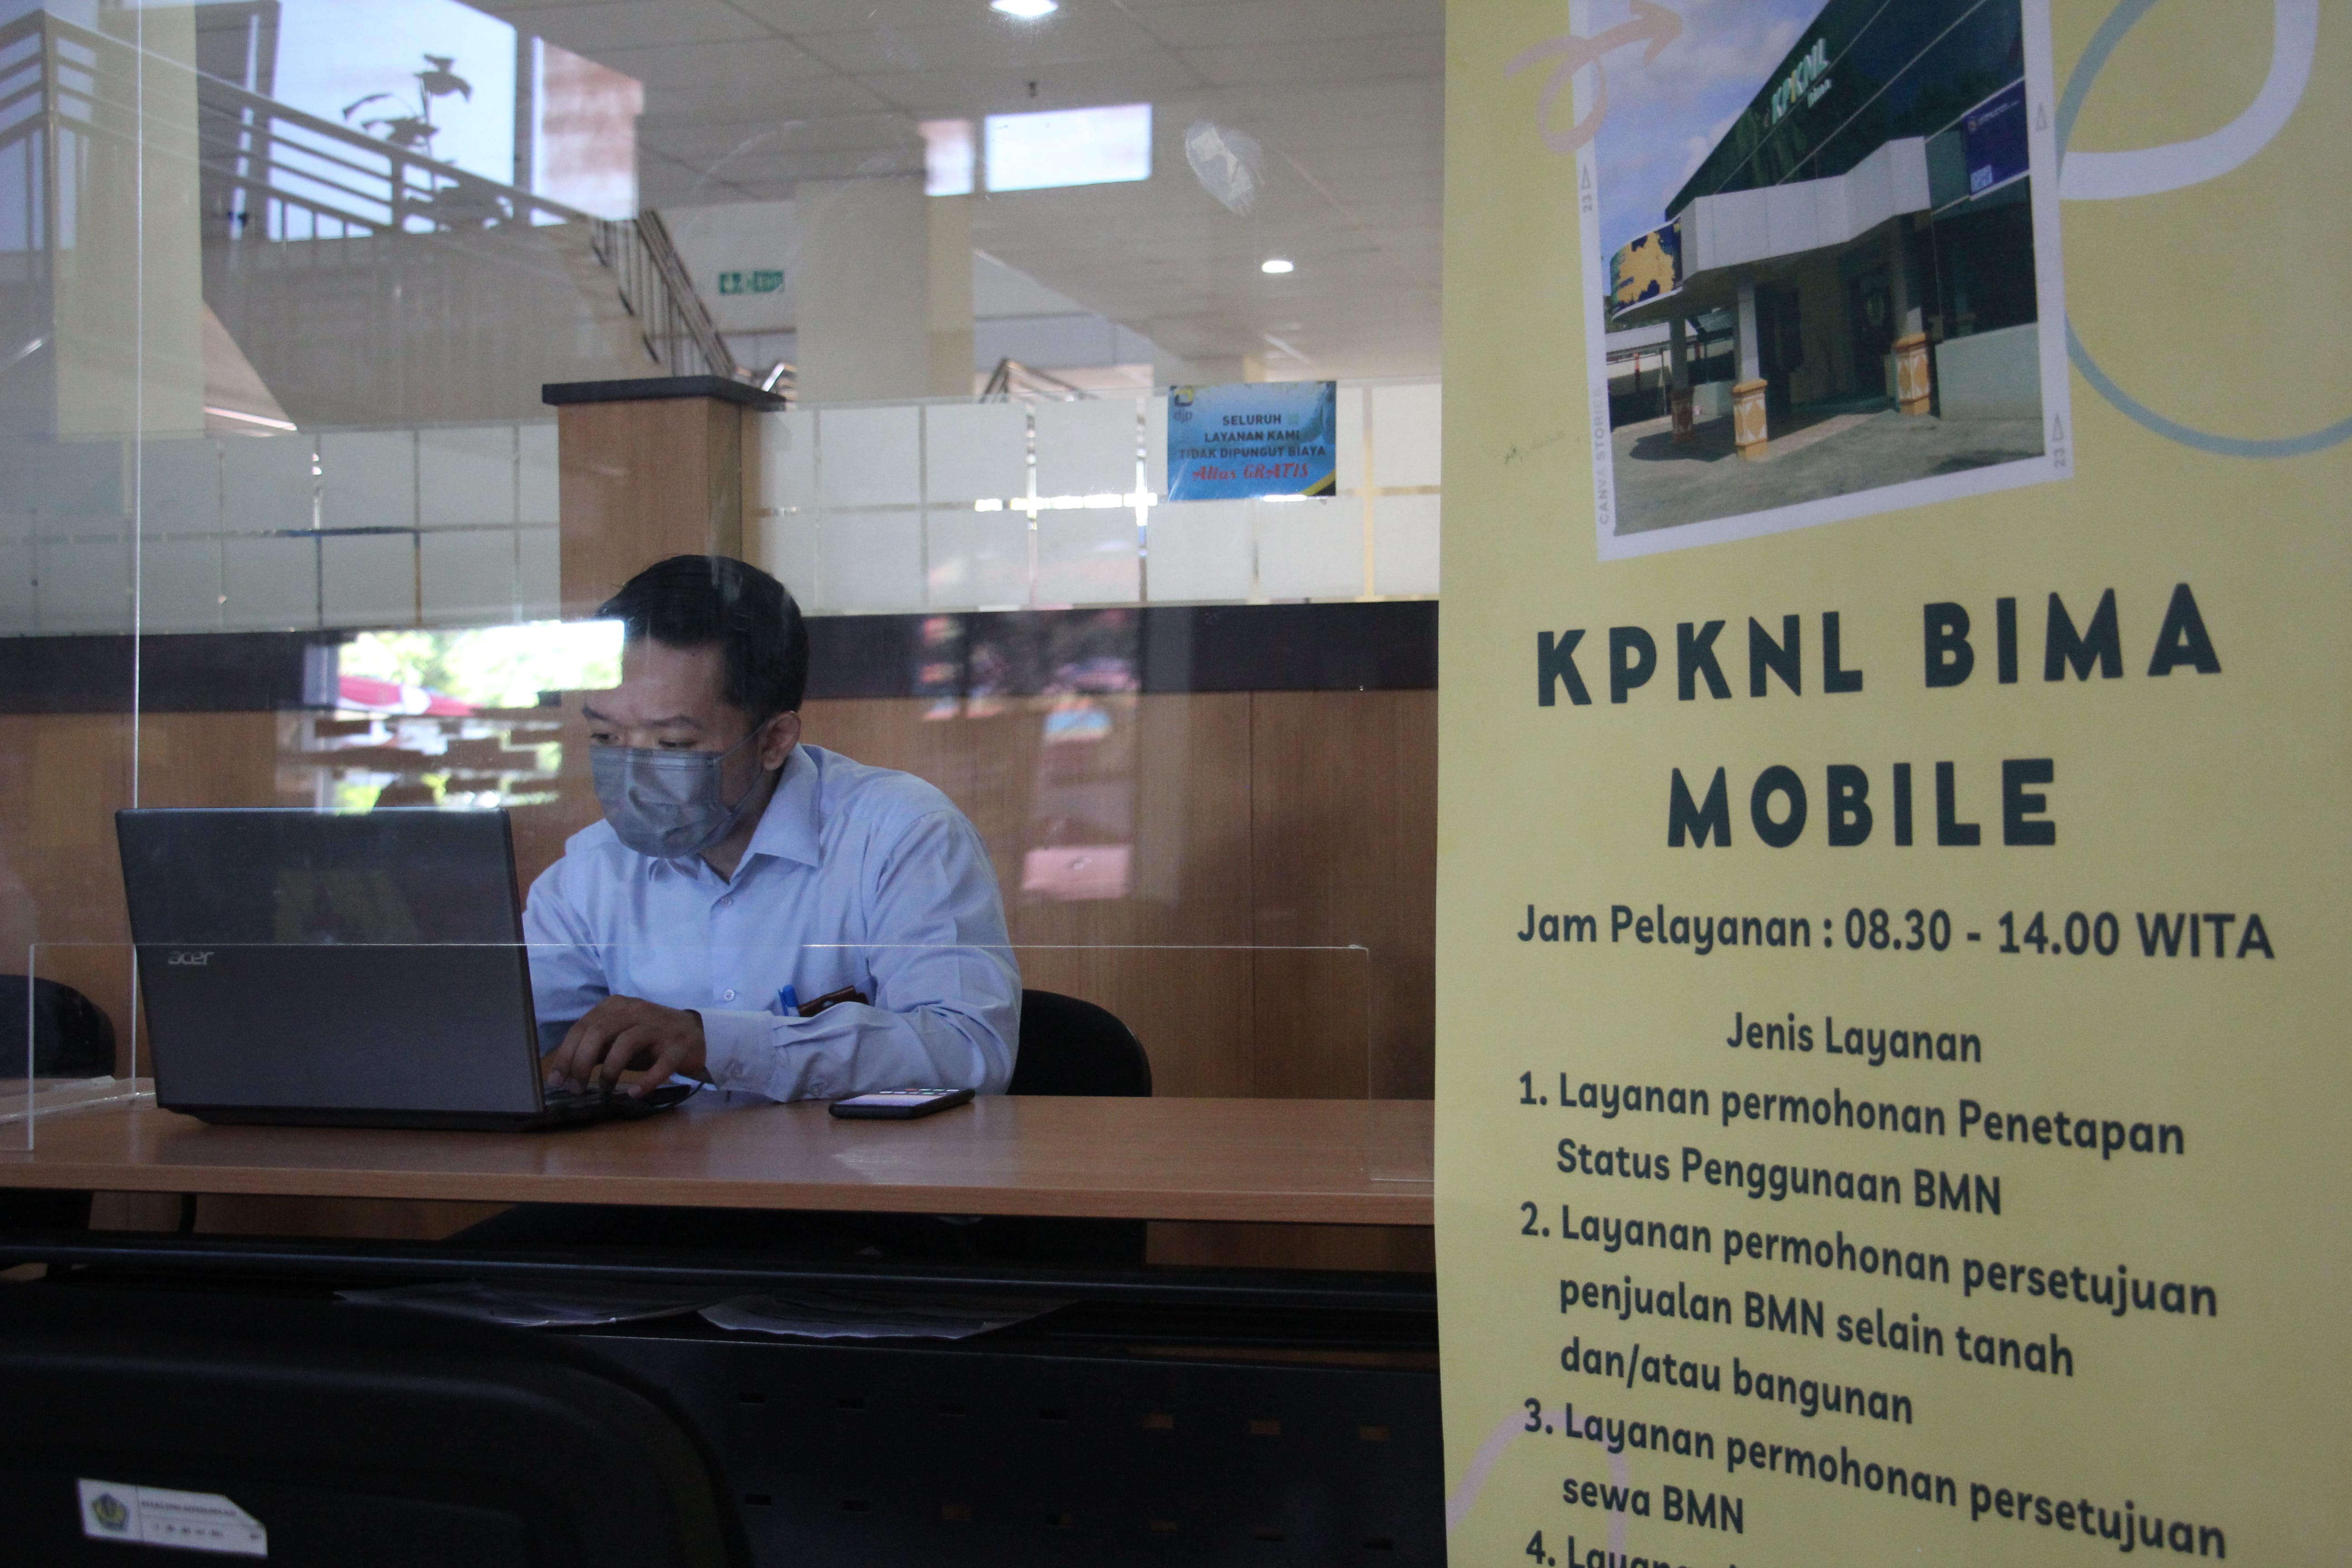 Penuhi Kepuasan Pengguna Layanan, KPKNL Bima Laksanakan KPKNL Bima Mobile